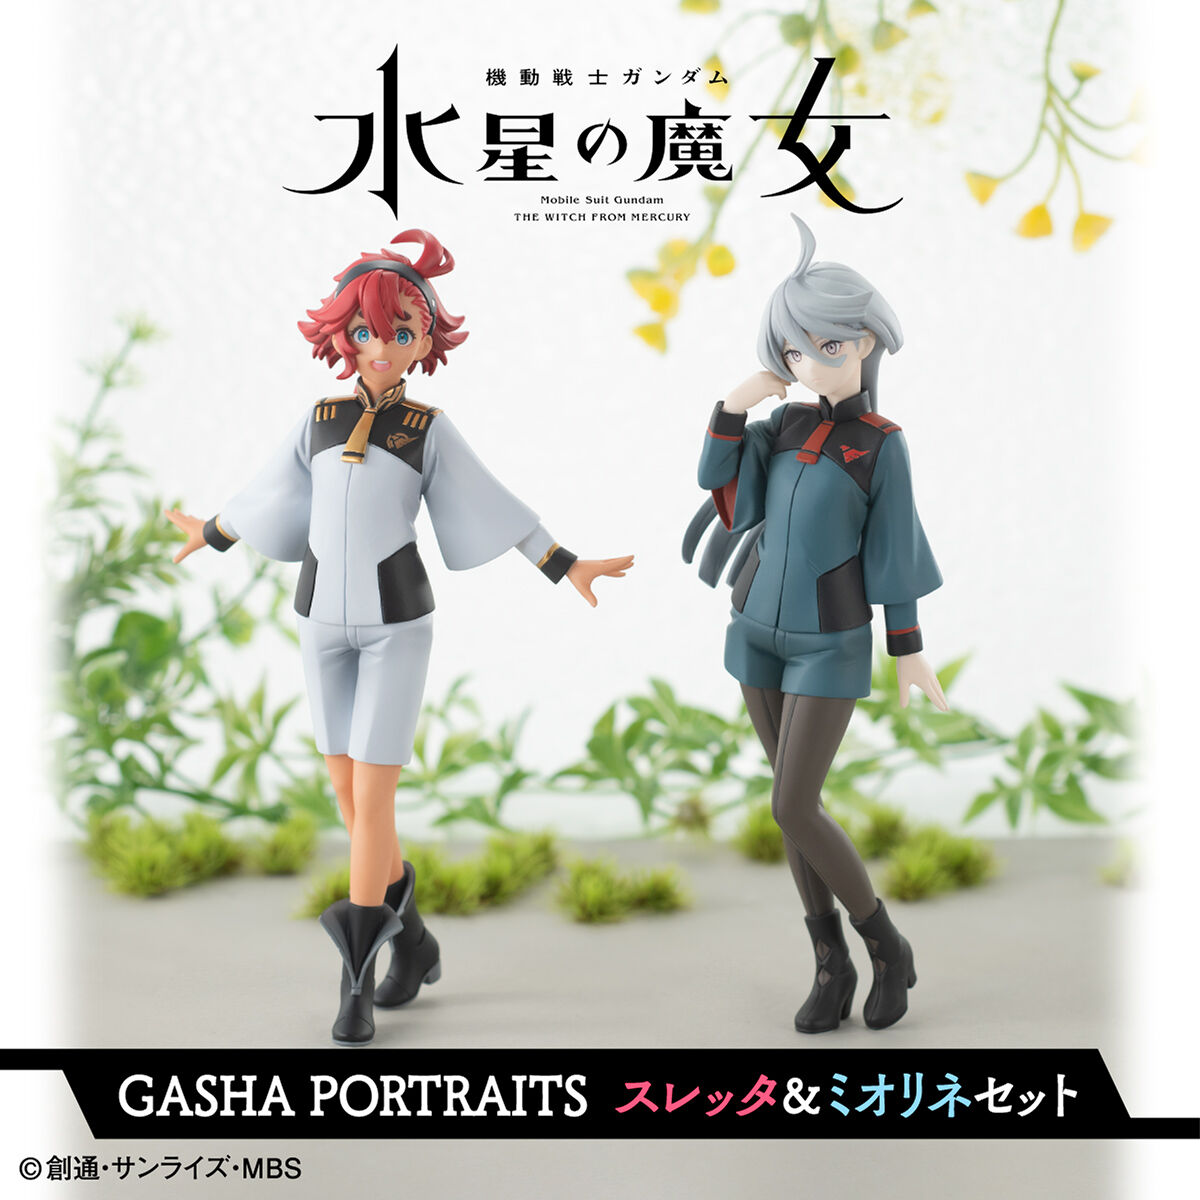 Gasha Portraits-Suletta Mercury + Miorine Rembran(Mobile Suit Gundam : The Witch from Mercury)